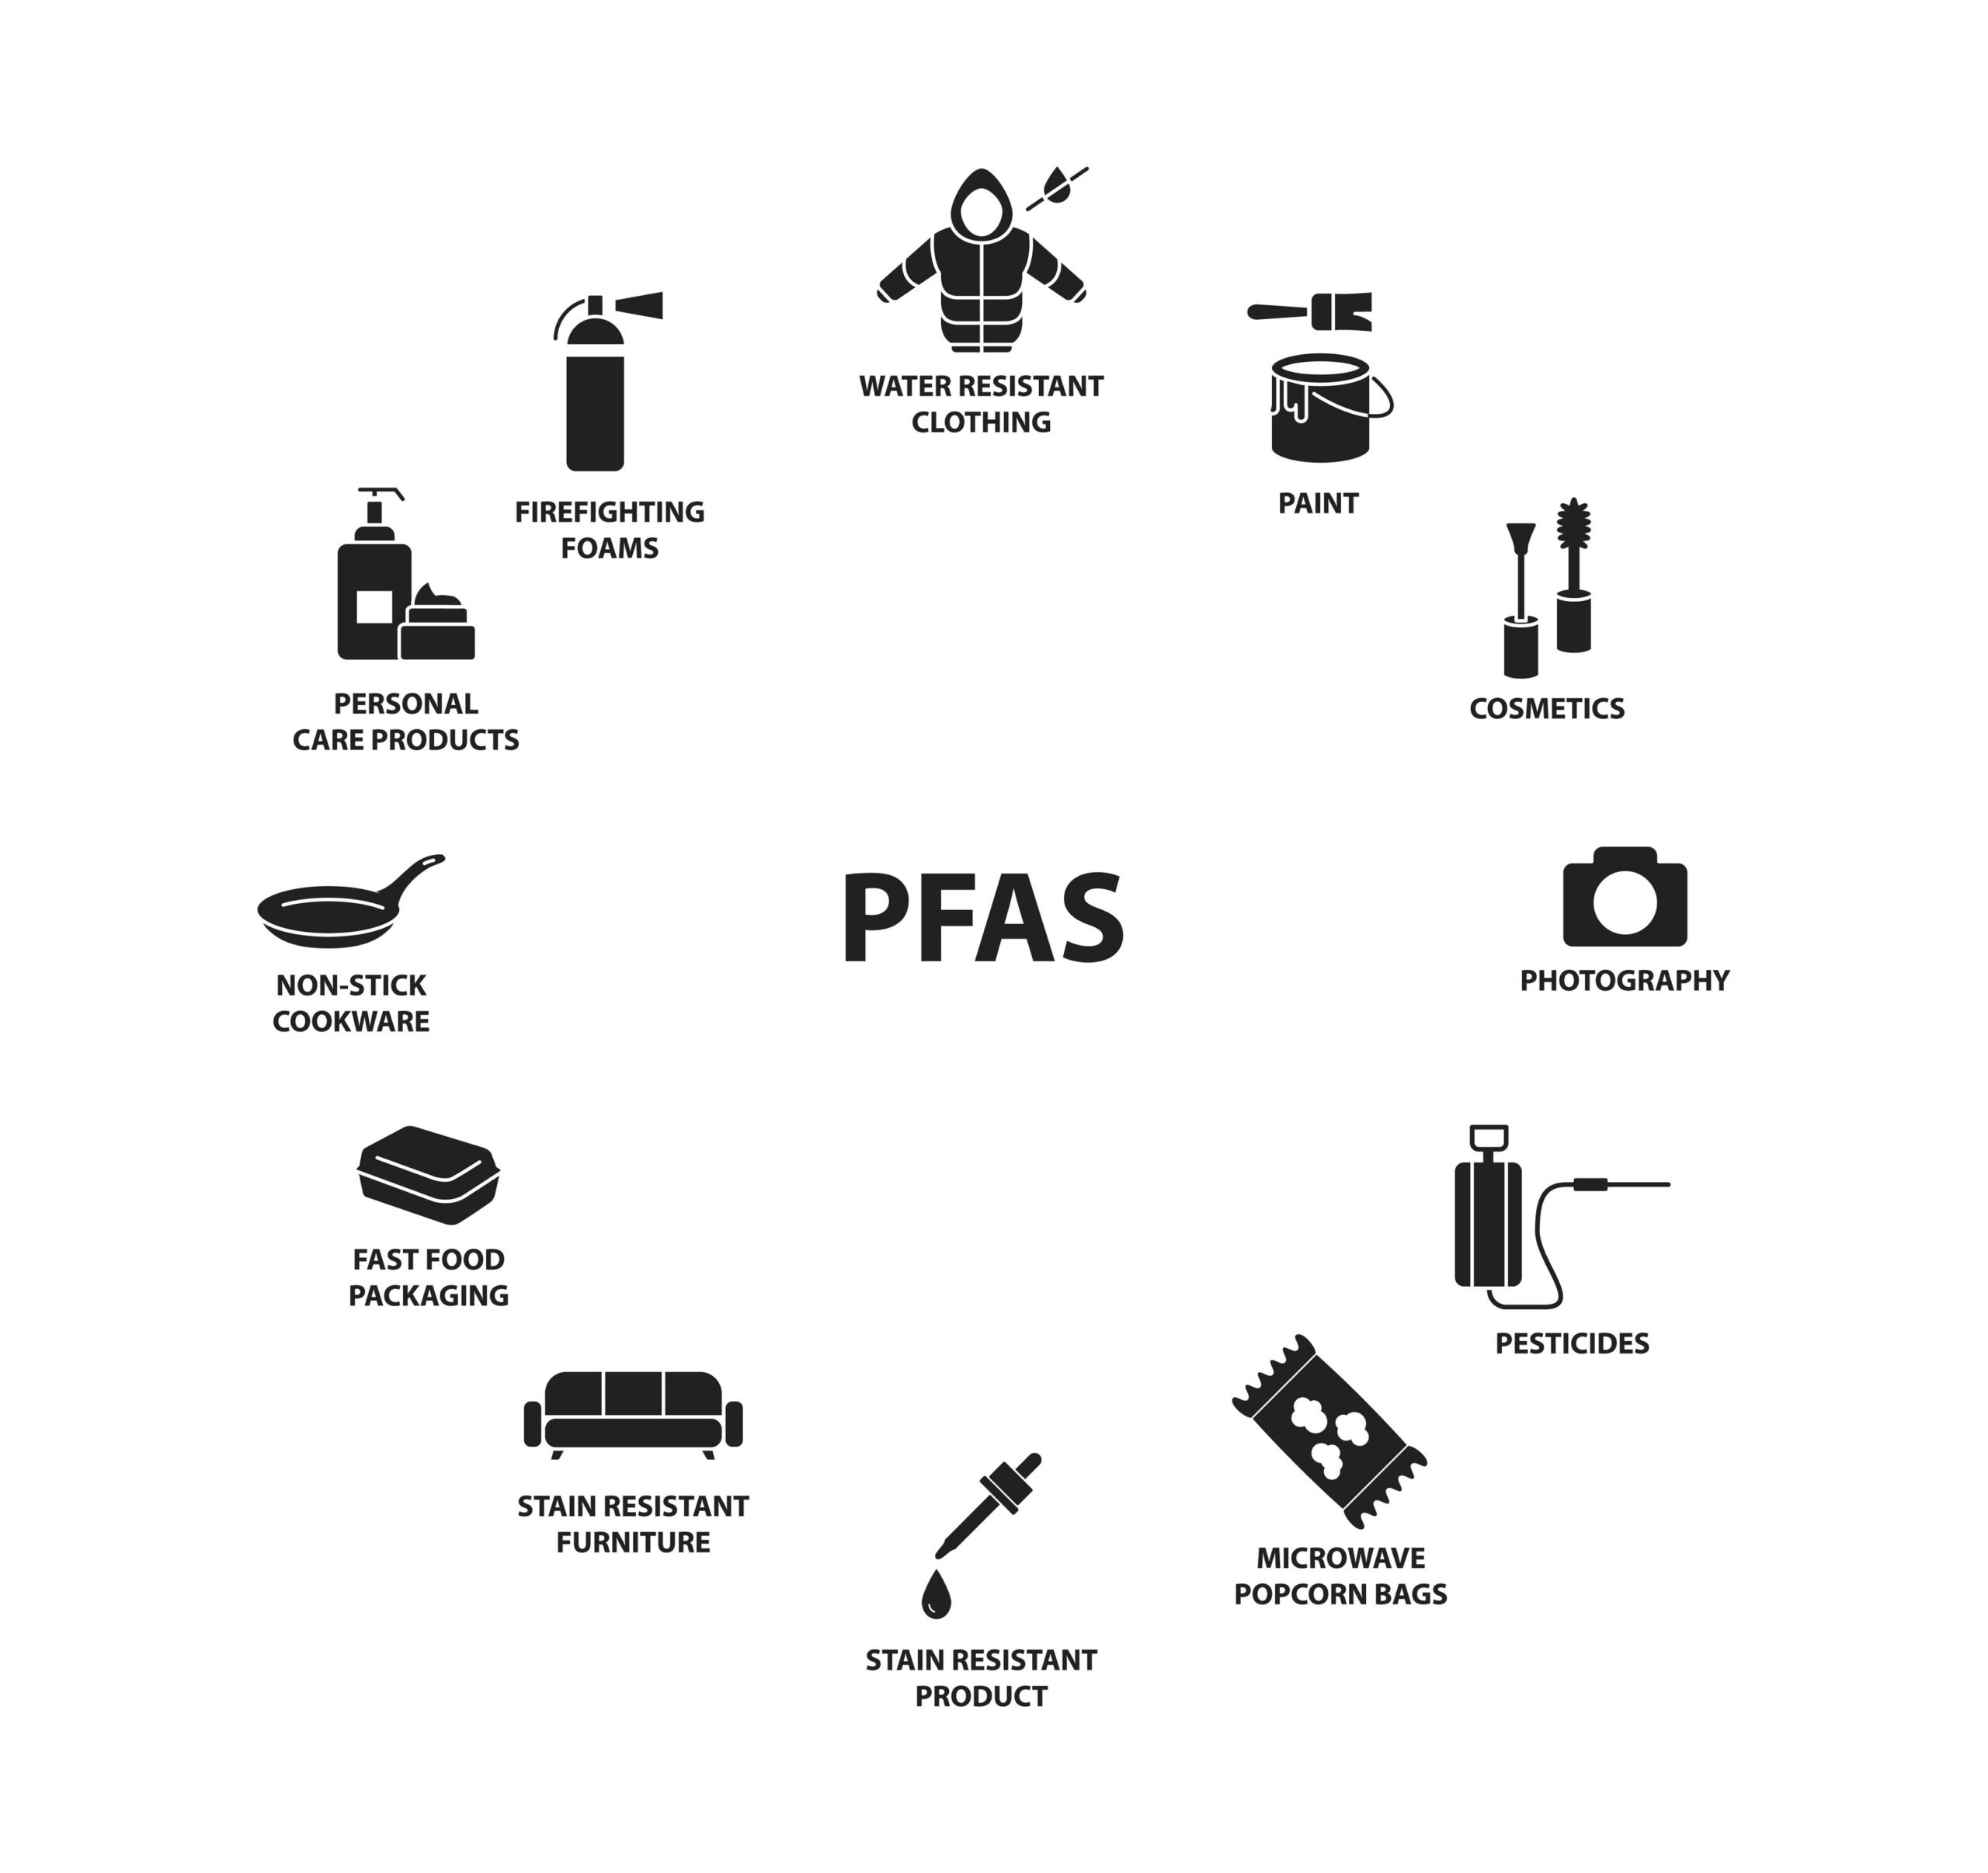 Examples of PFAS